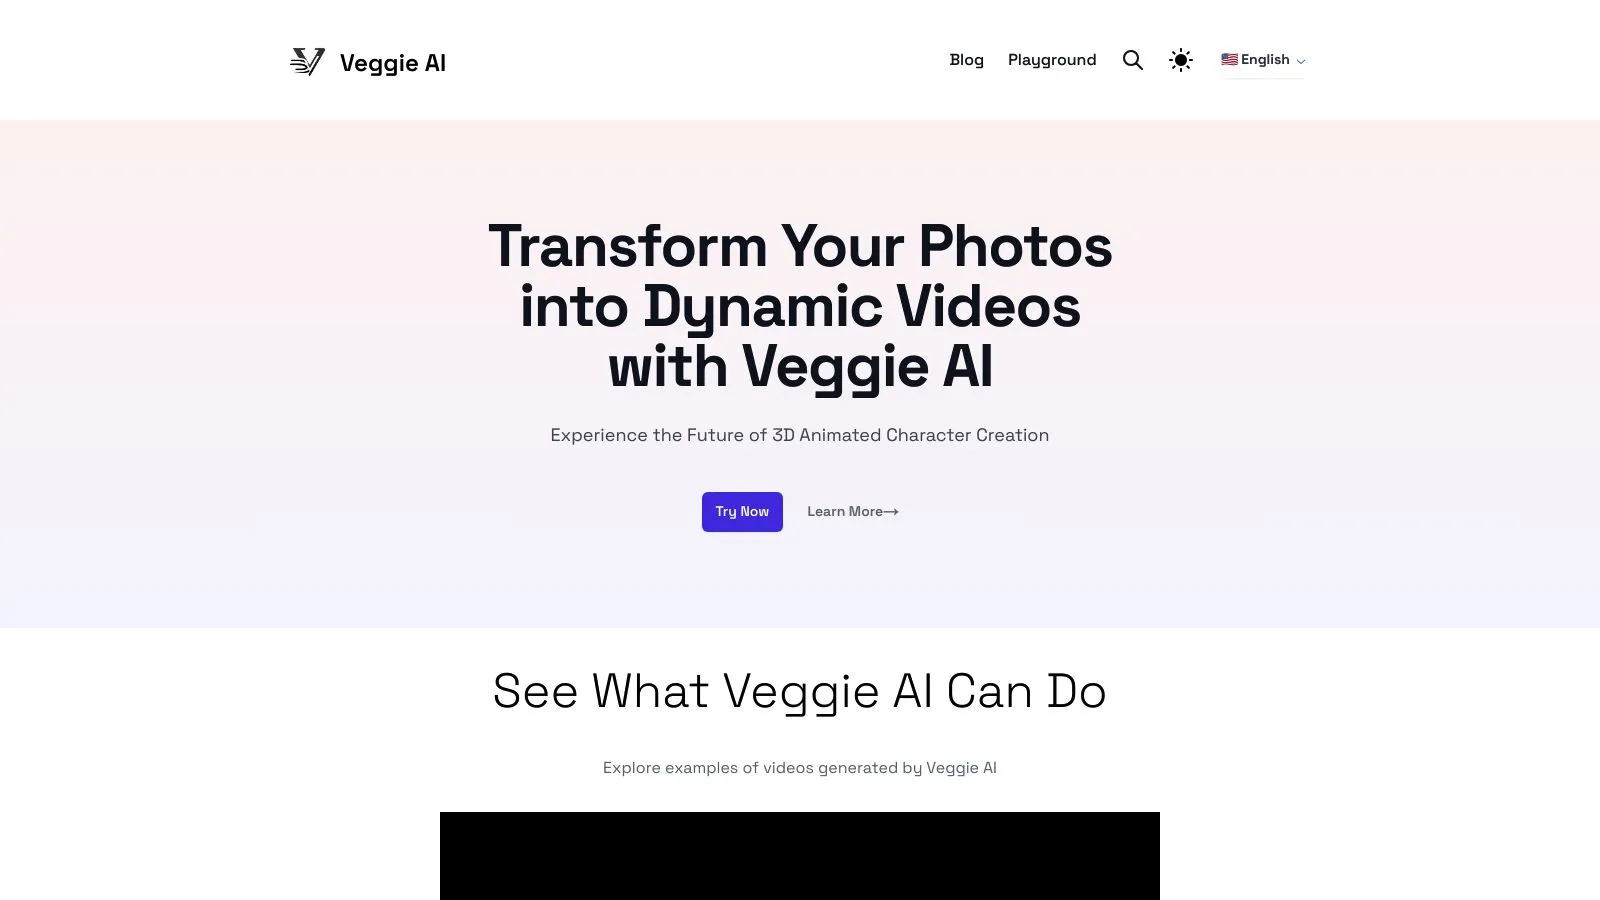 Featured image of Veggie AI website